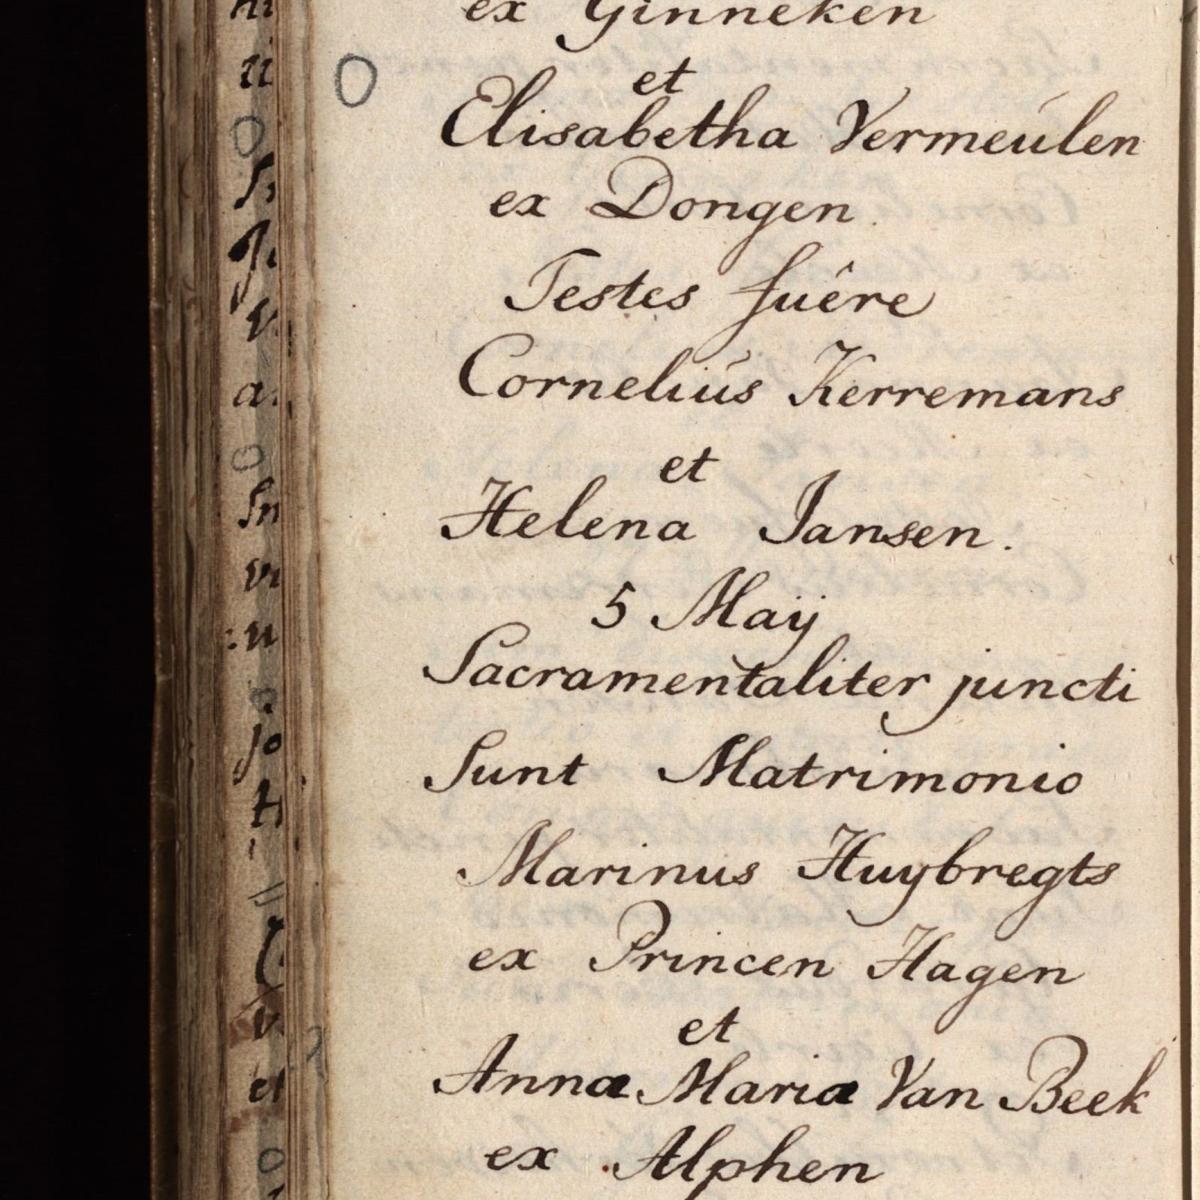 Registry of marriages, Roman Catholic church, Ginneken, 1793, sheet 72v